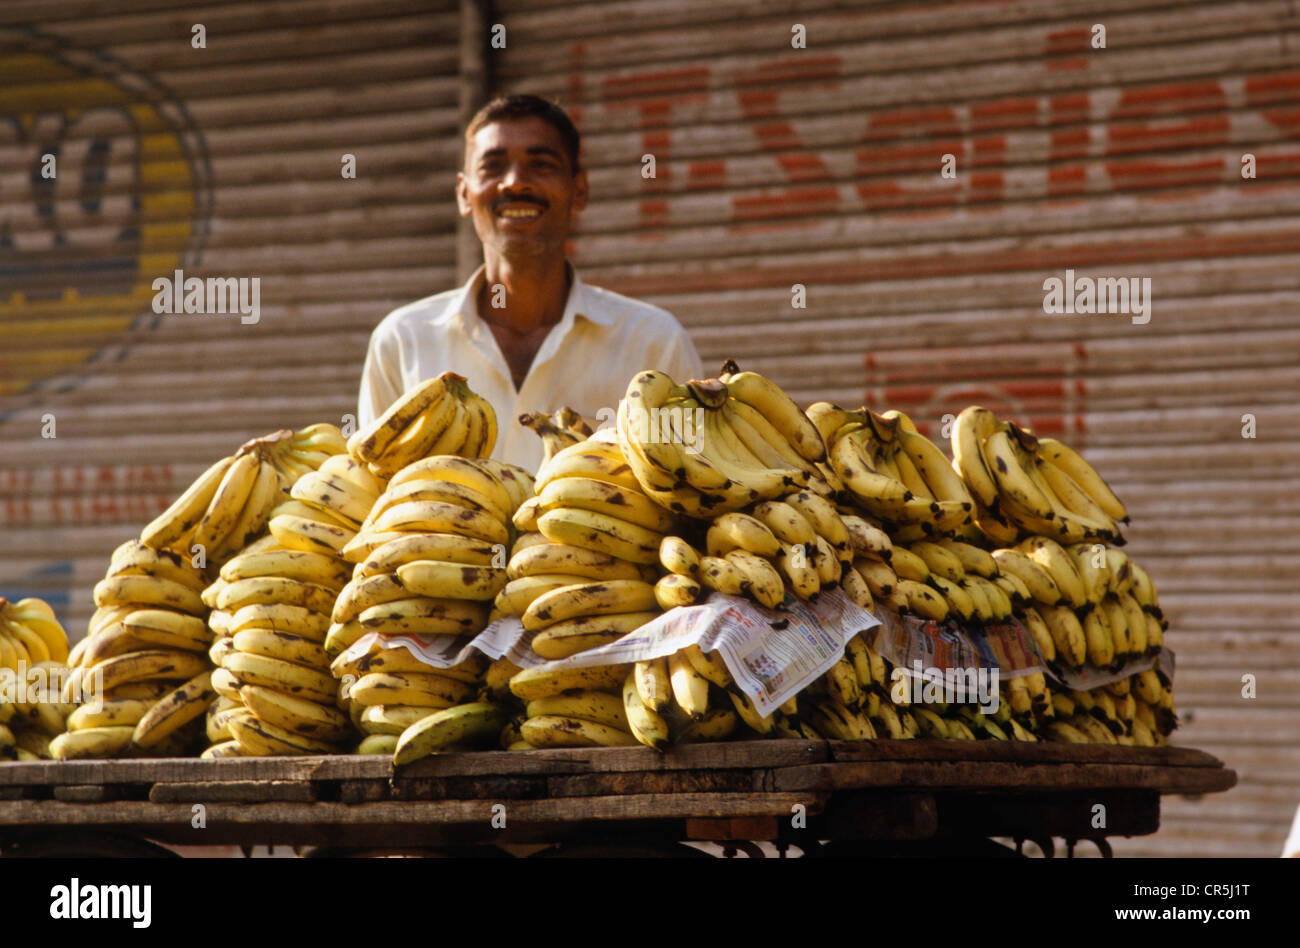 Street vendor selling bananas, New Delhi, India, Asia Stock Photo